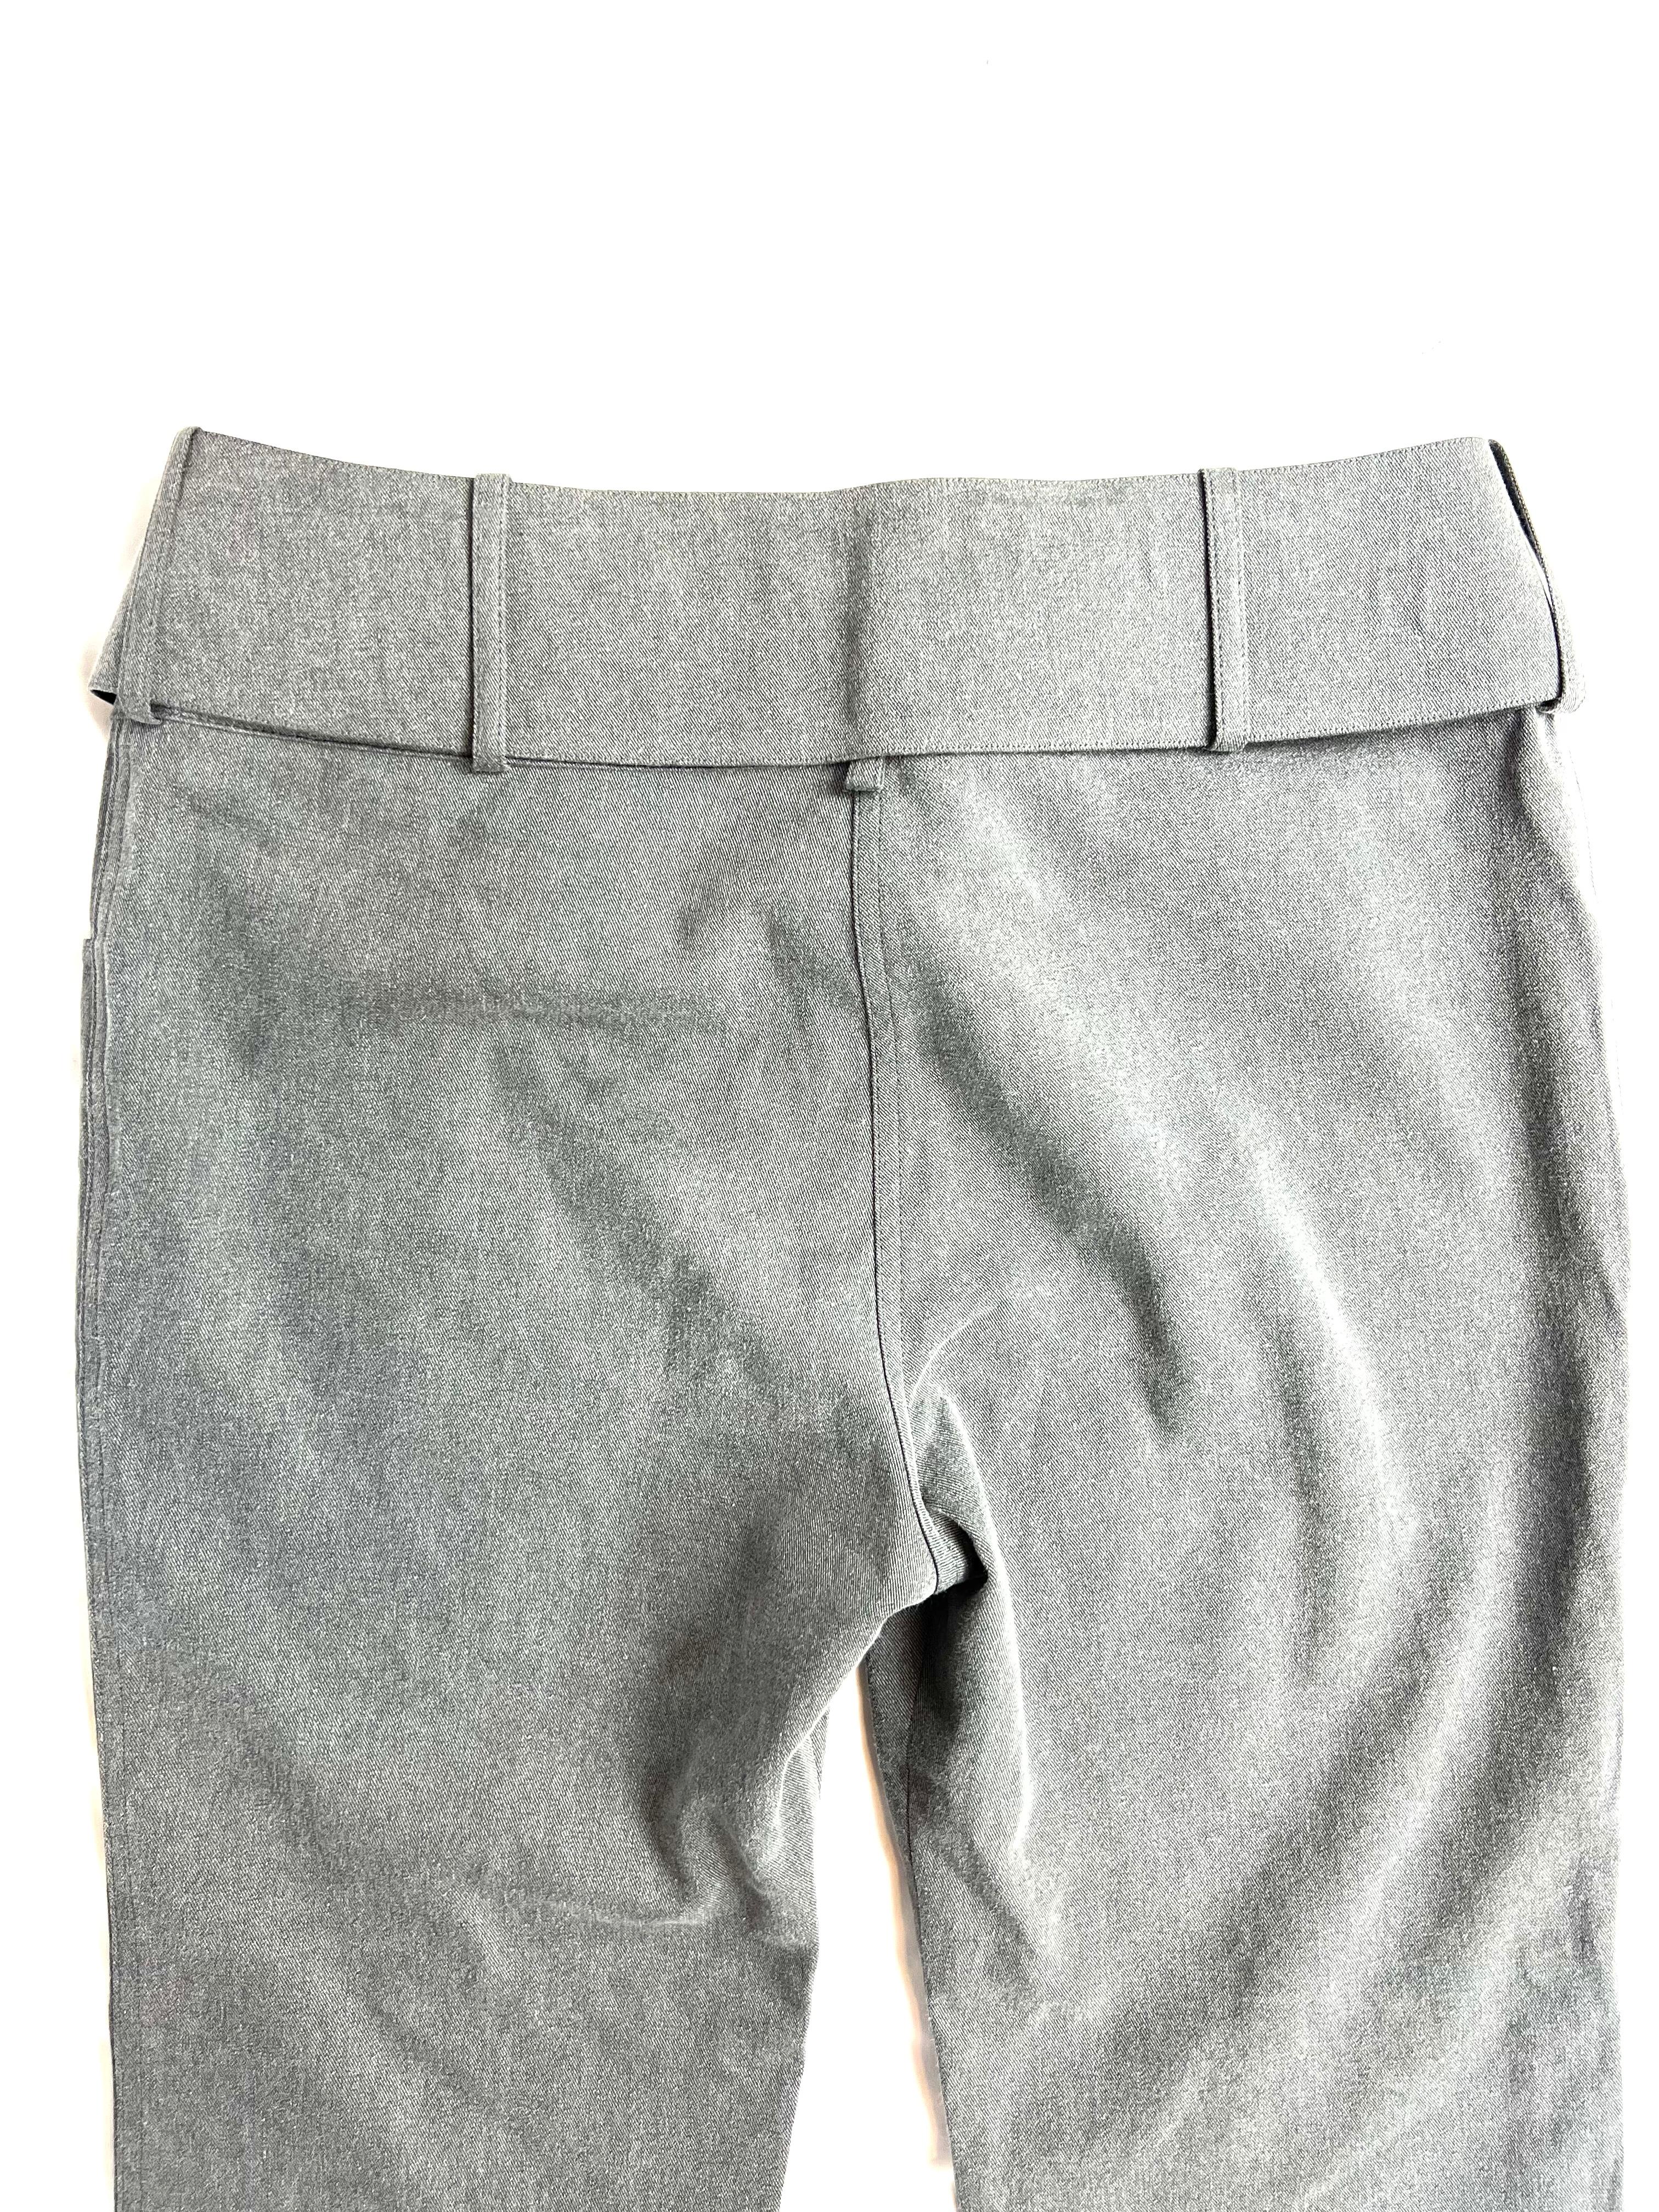 Christian Dior - Pantalon en jean gris, taille 10 en vente 4